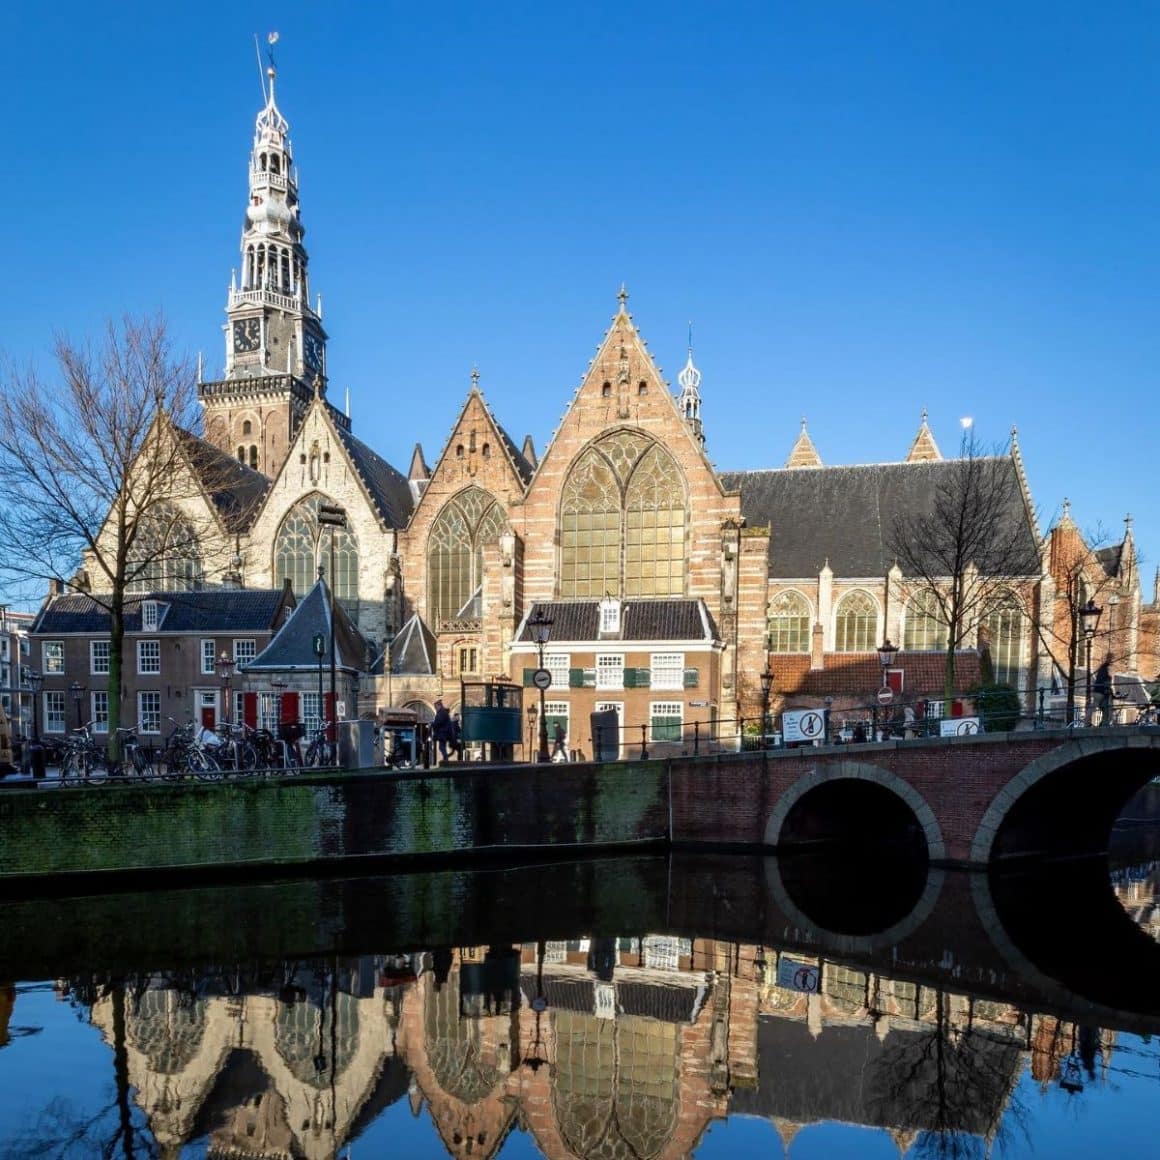 oude kerk din amsterdam, in dreptul unui canal cu poduri